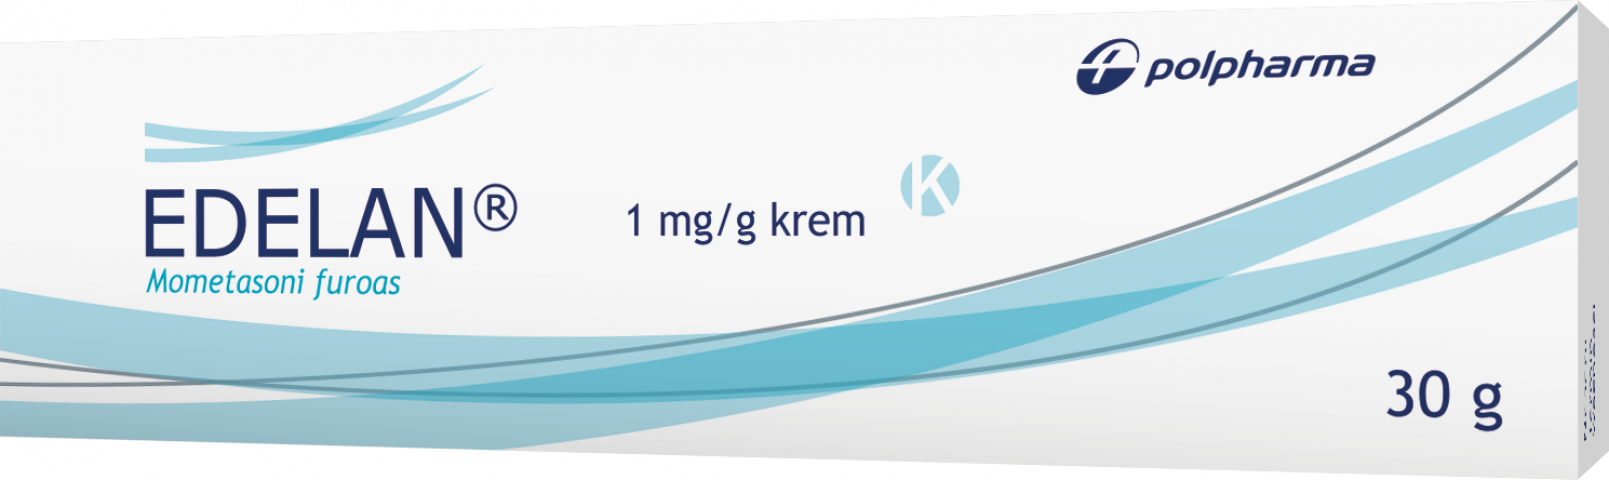 Edelan krem 1 mg/g x 30 g